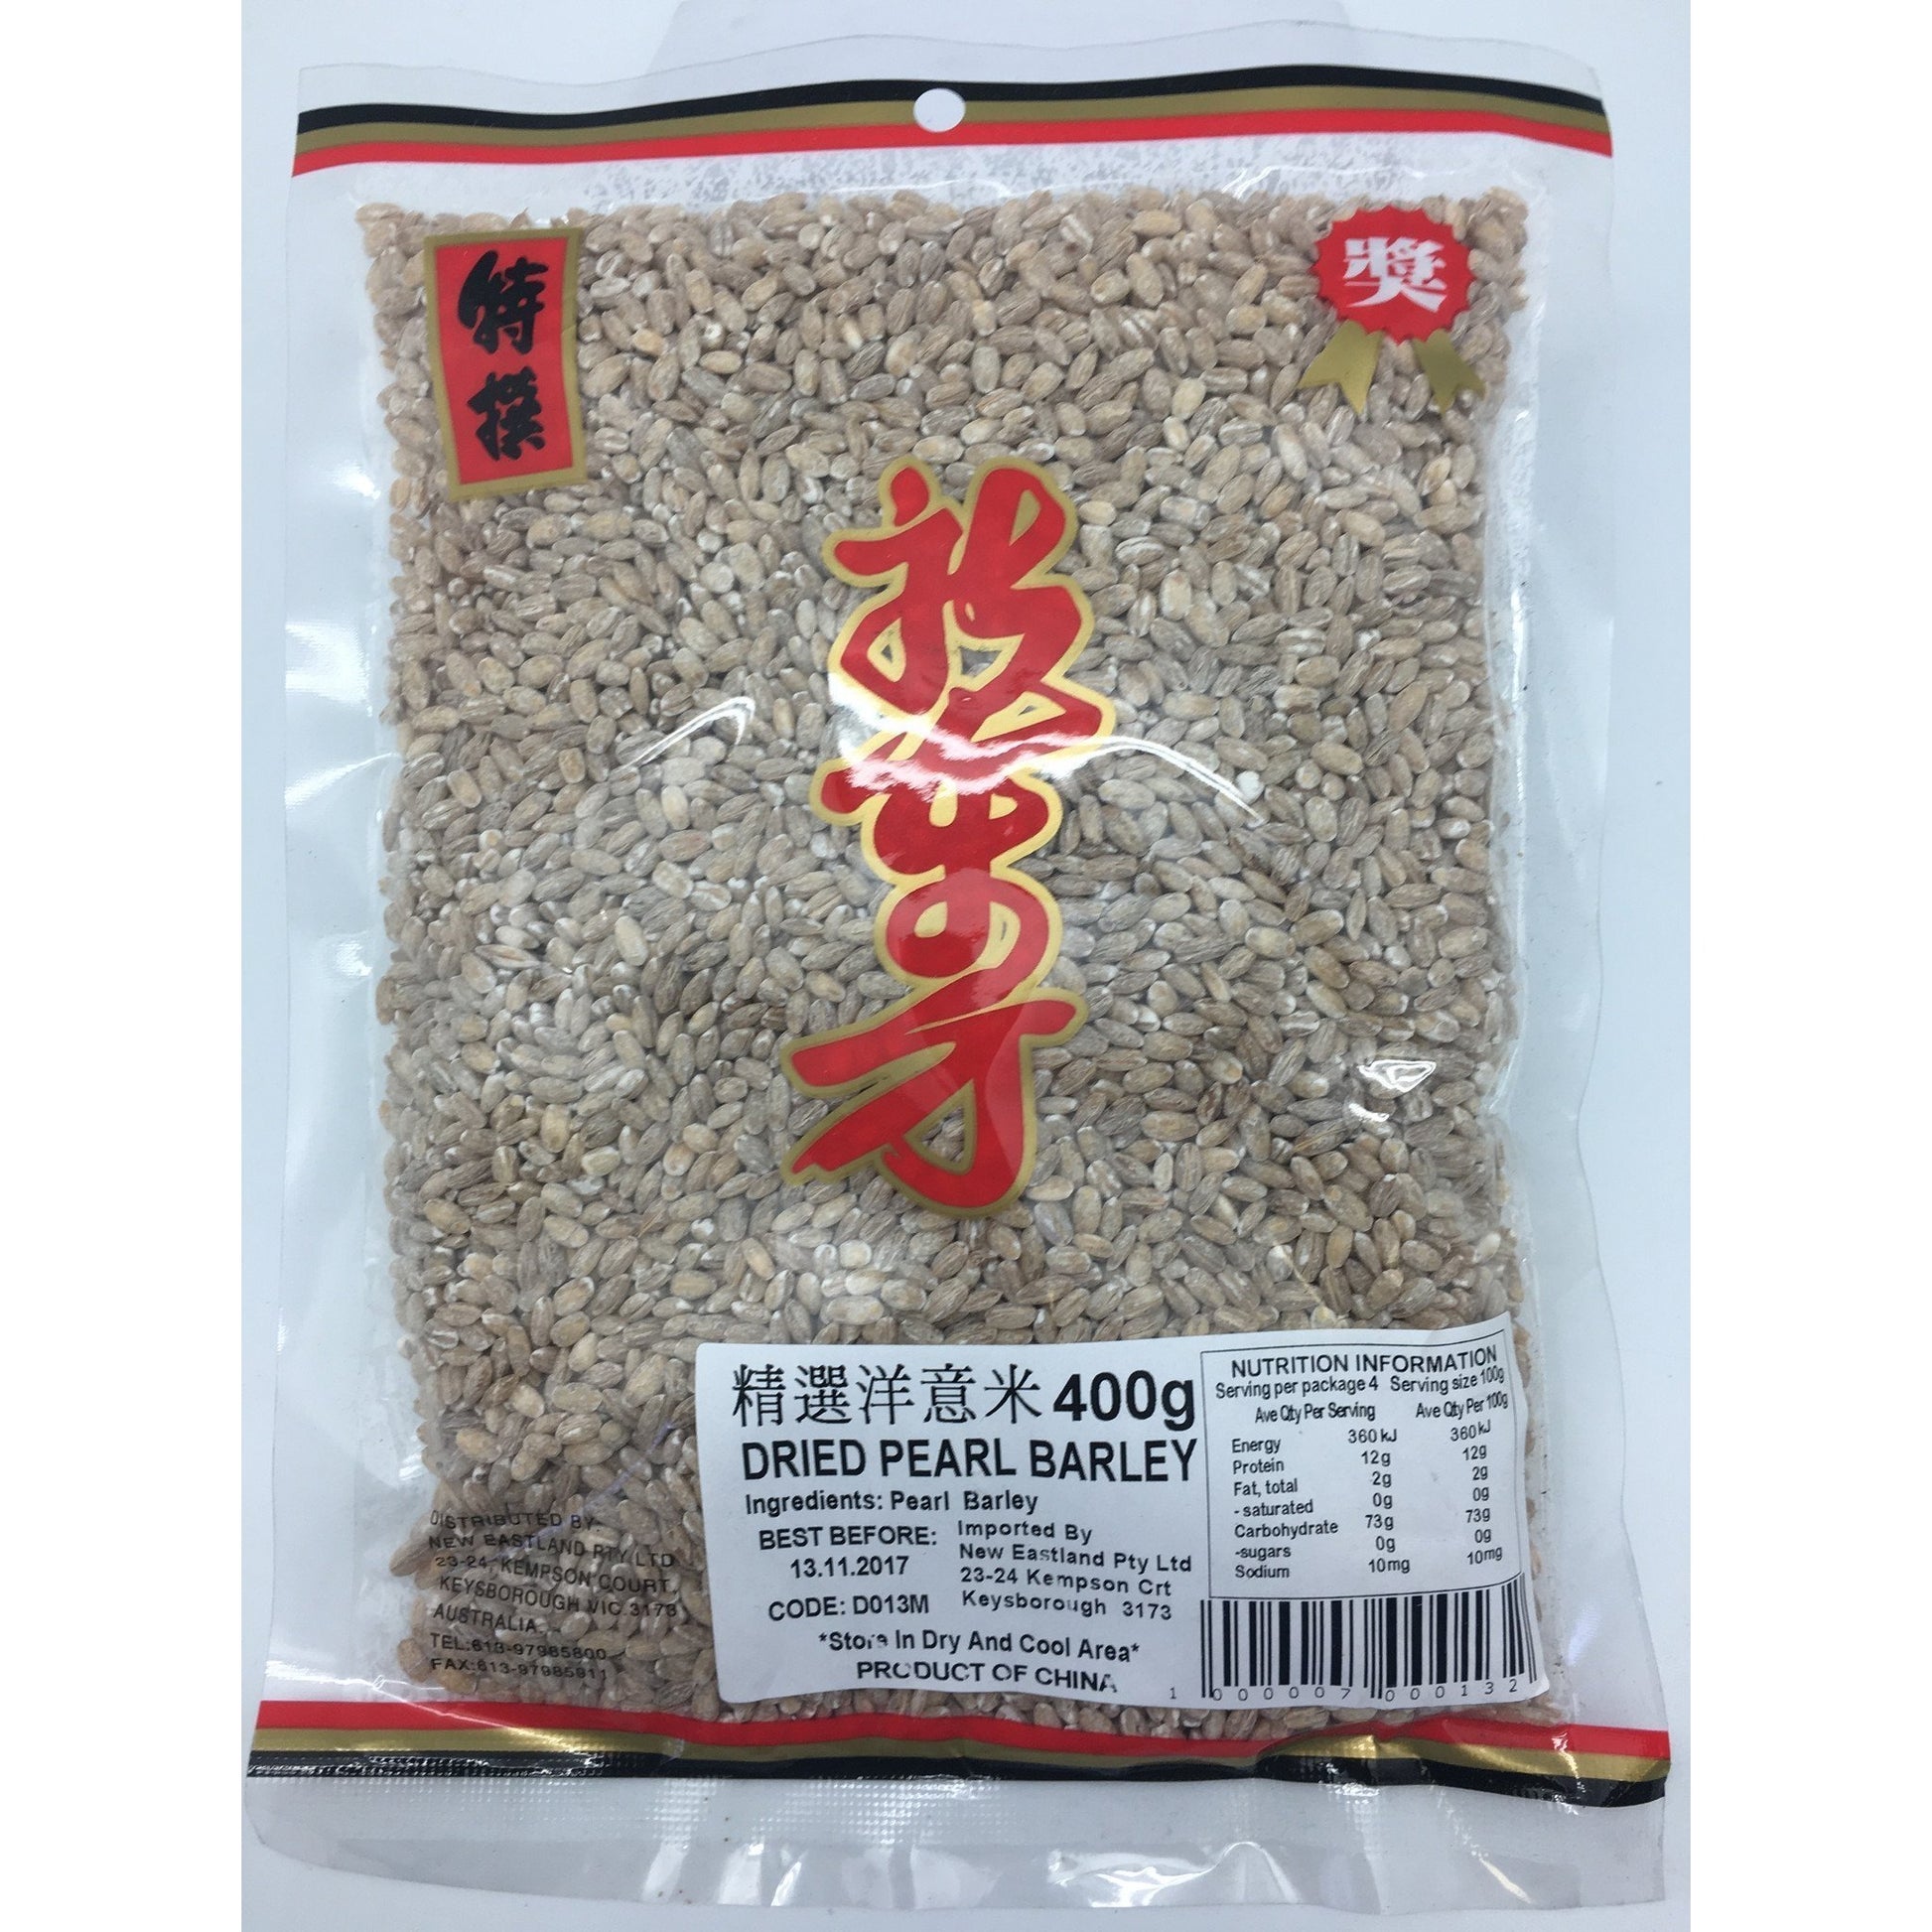 D013M New Eastland Brand - Dried Pearl Barley (Small) 400g - 25 bags / 1CTN - New Eastland Pty Ltd - Asian food wholesalers